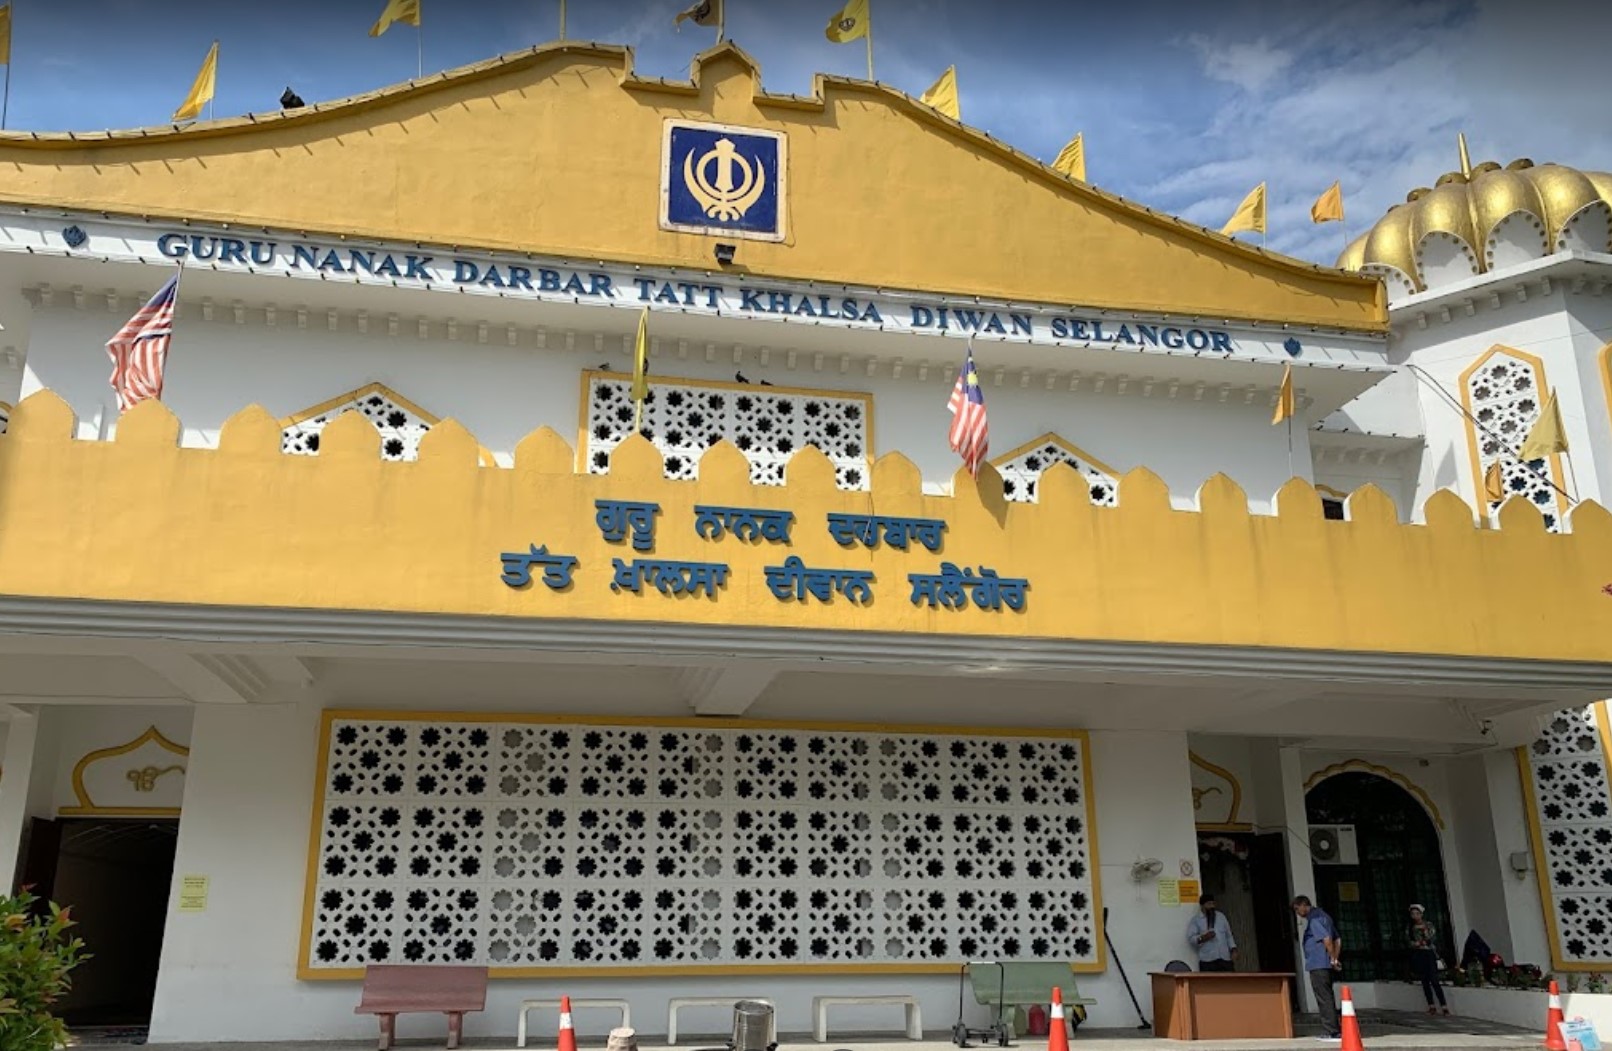 Gurudwara Nanak Darbar Tatt Khalsa, Kuala Lumpur, Malaysia